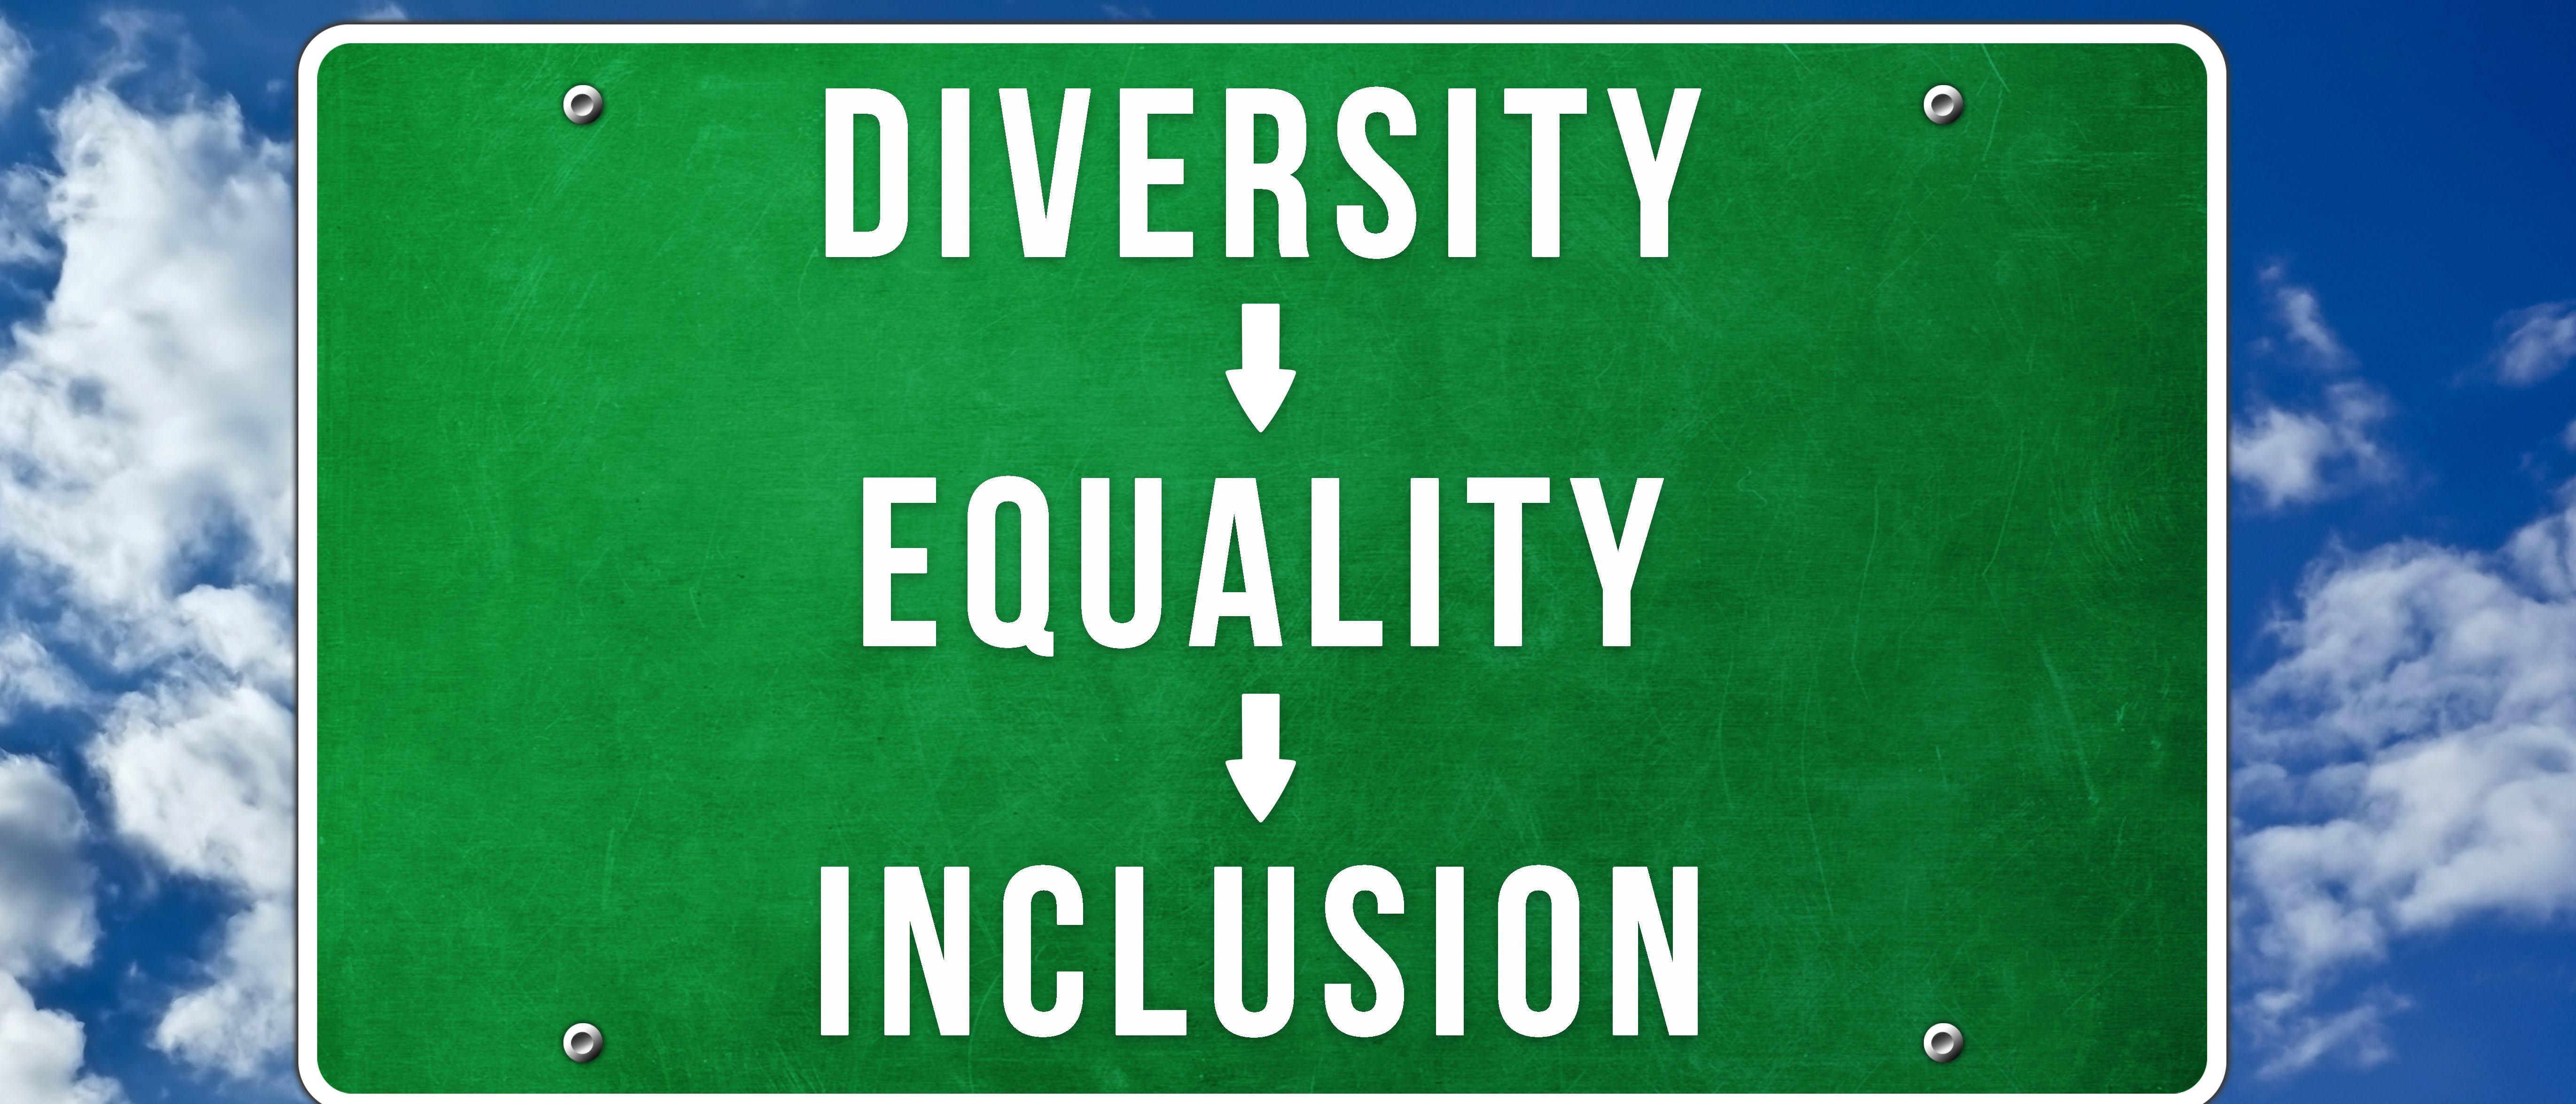 Diversity Inclusion Board (Shutterstock/gguy)